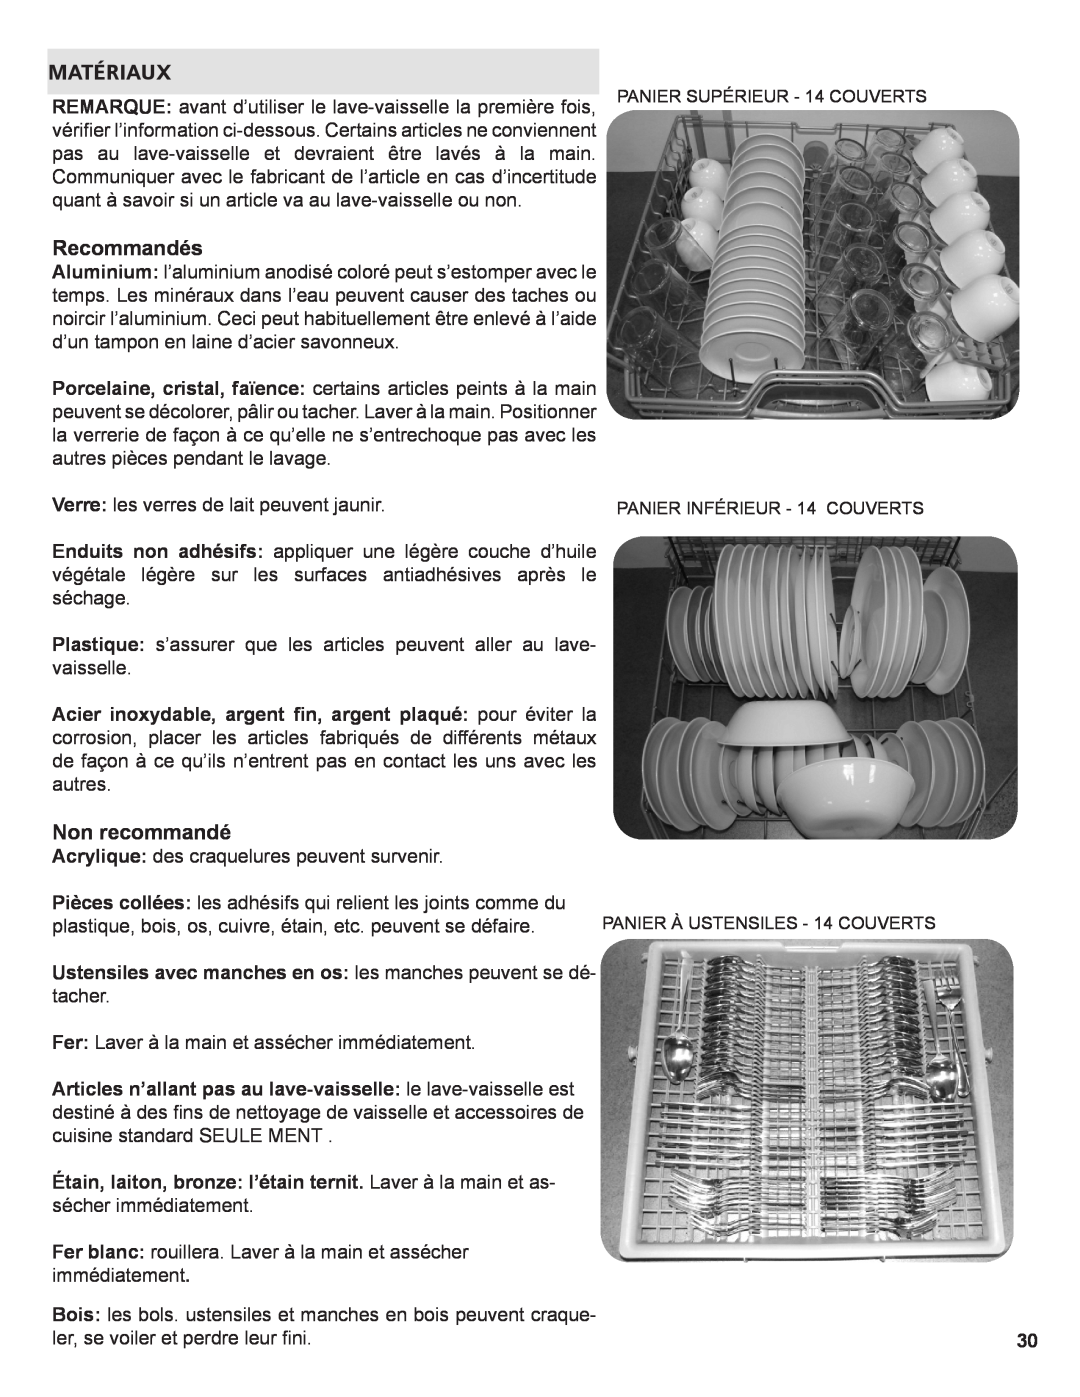 Thermador Dishwasher manual Matériaux, Recommandés, Non recommandé 